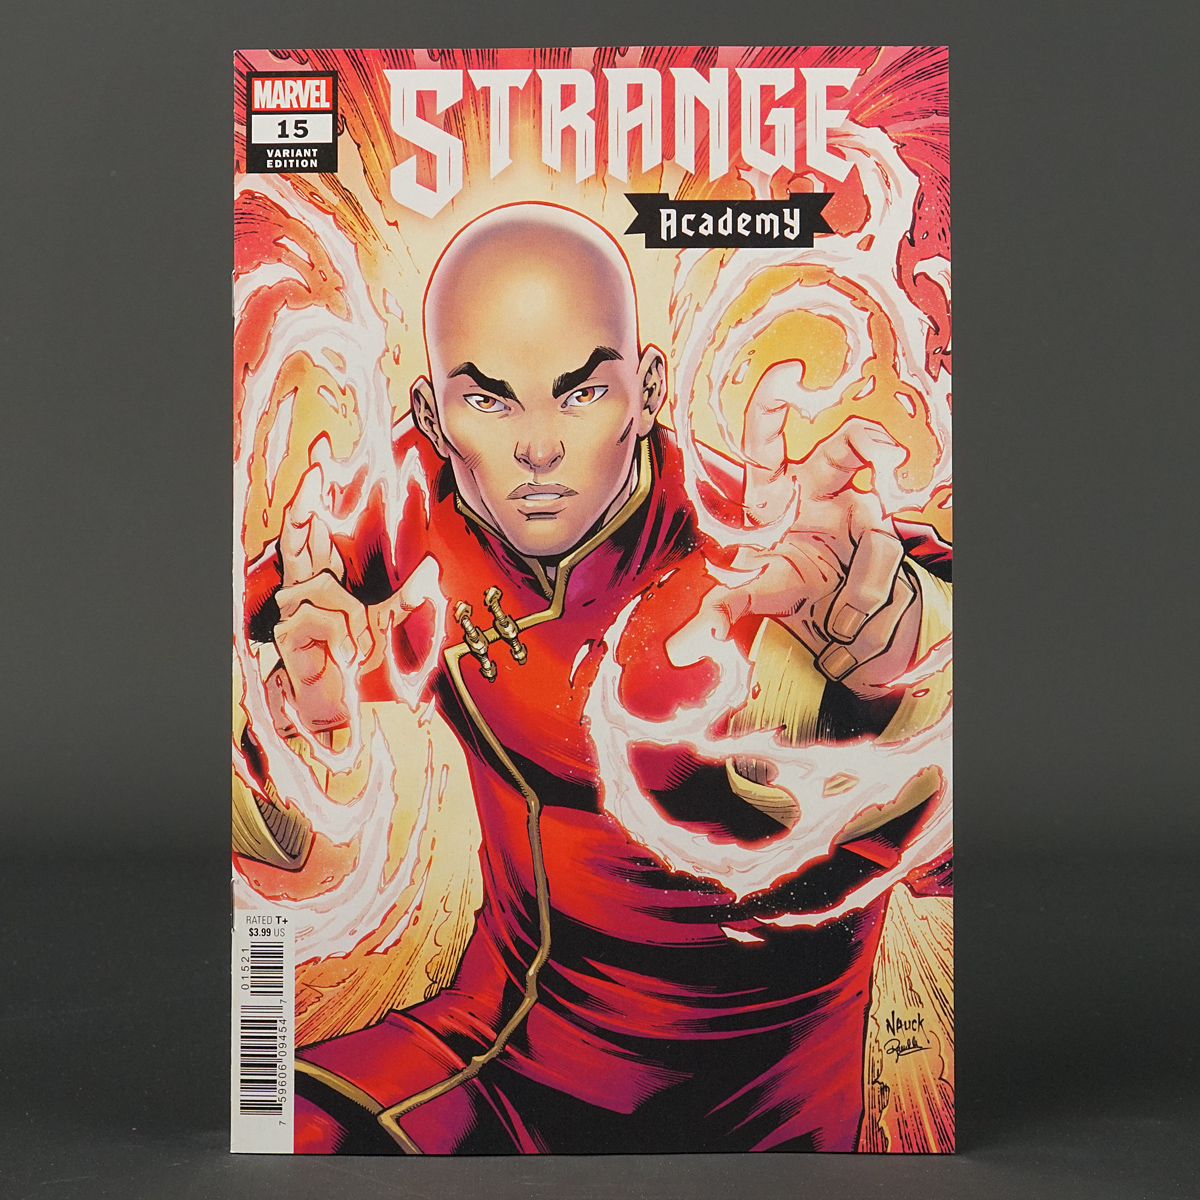 STRANGE ACADEMY #15 character spotlight Marvel Comics 2022 OCT211034 (CA) Nauck